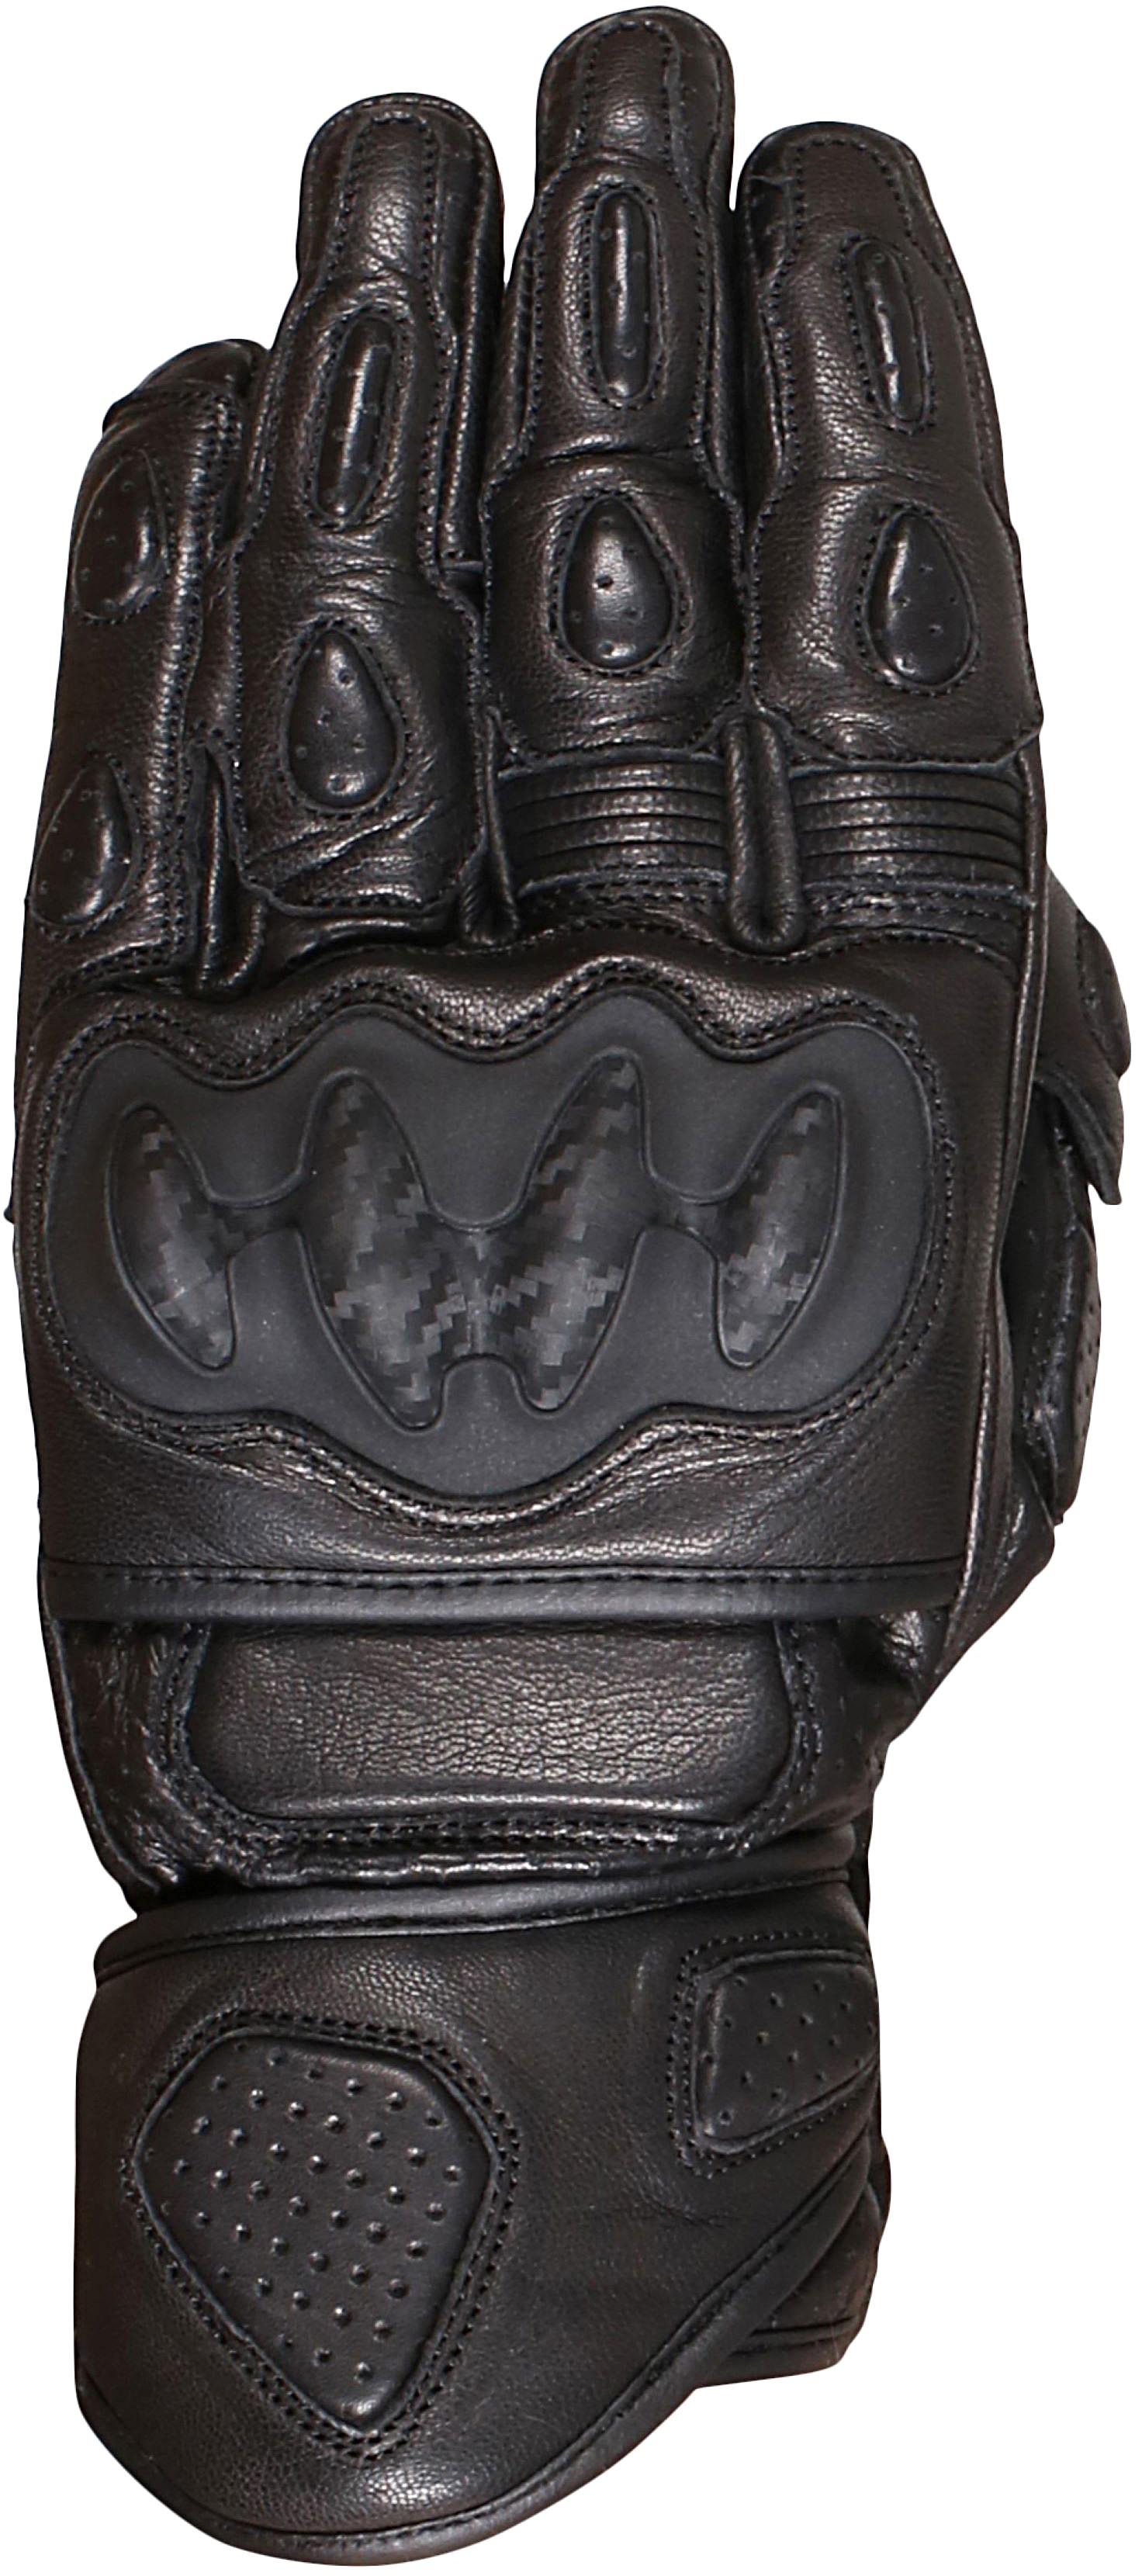 Weise Apex Motorcycle Gloves - Black, 2Xl